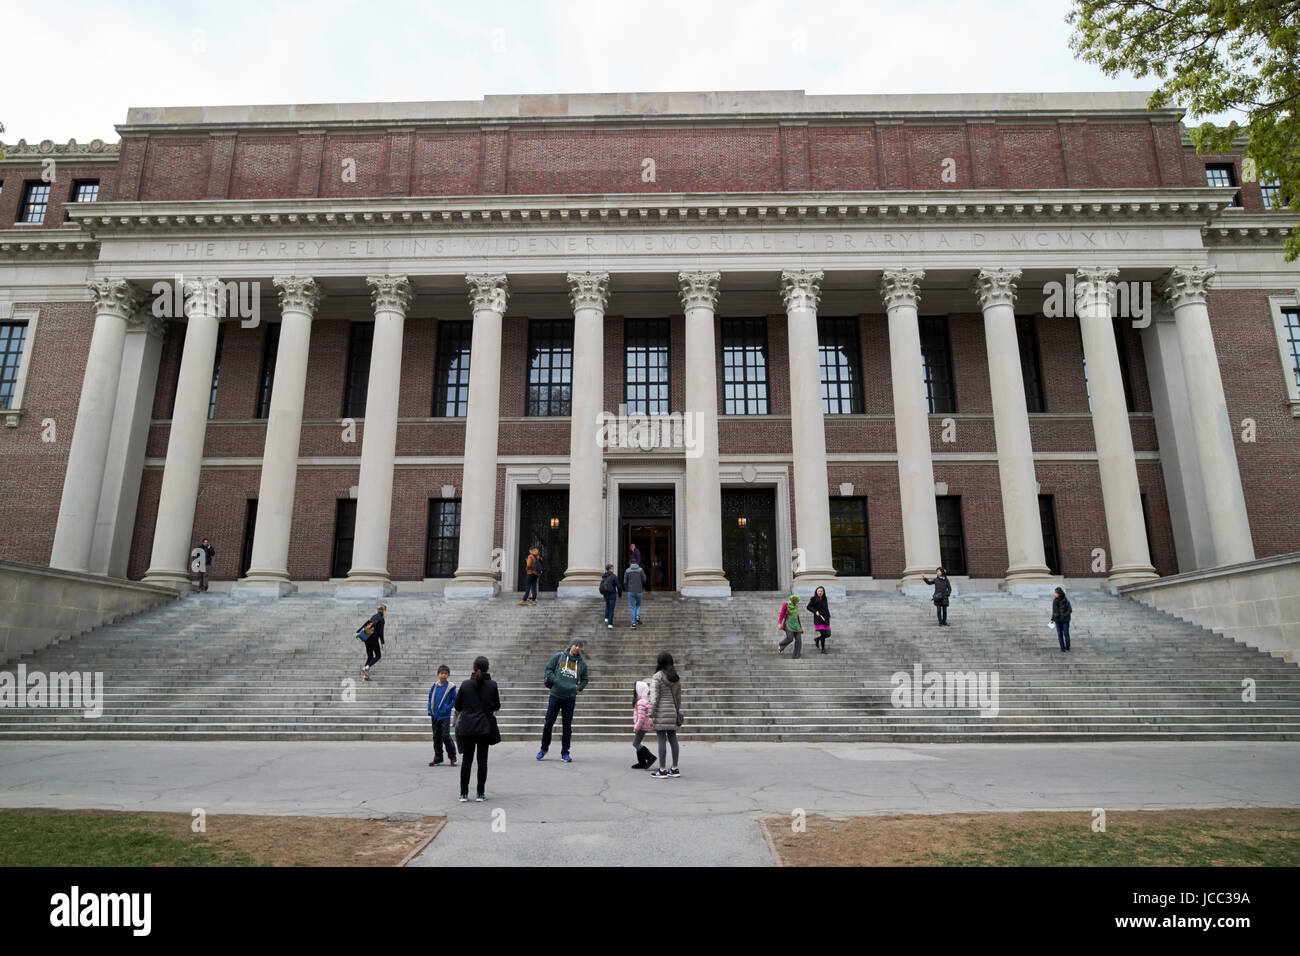 Harry elkins widener memorial library Harvard University campus Cambridge Boston USA Banque D'Images